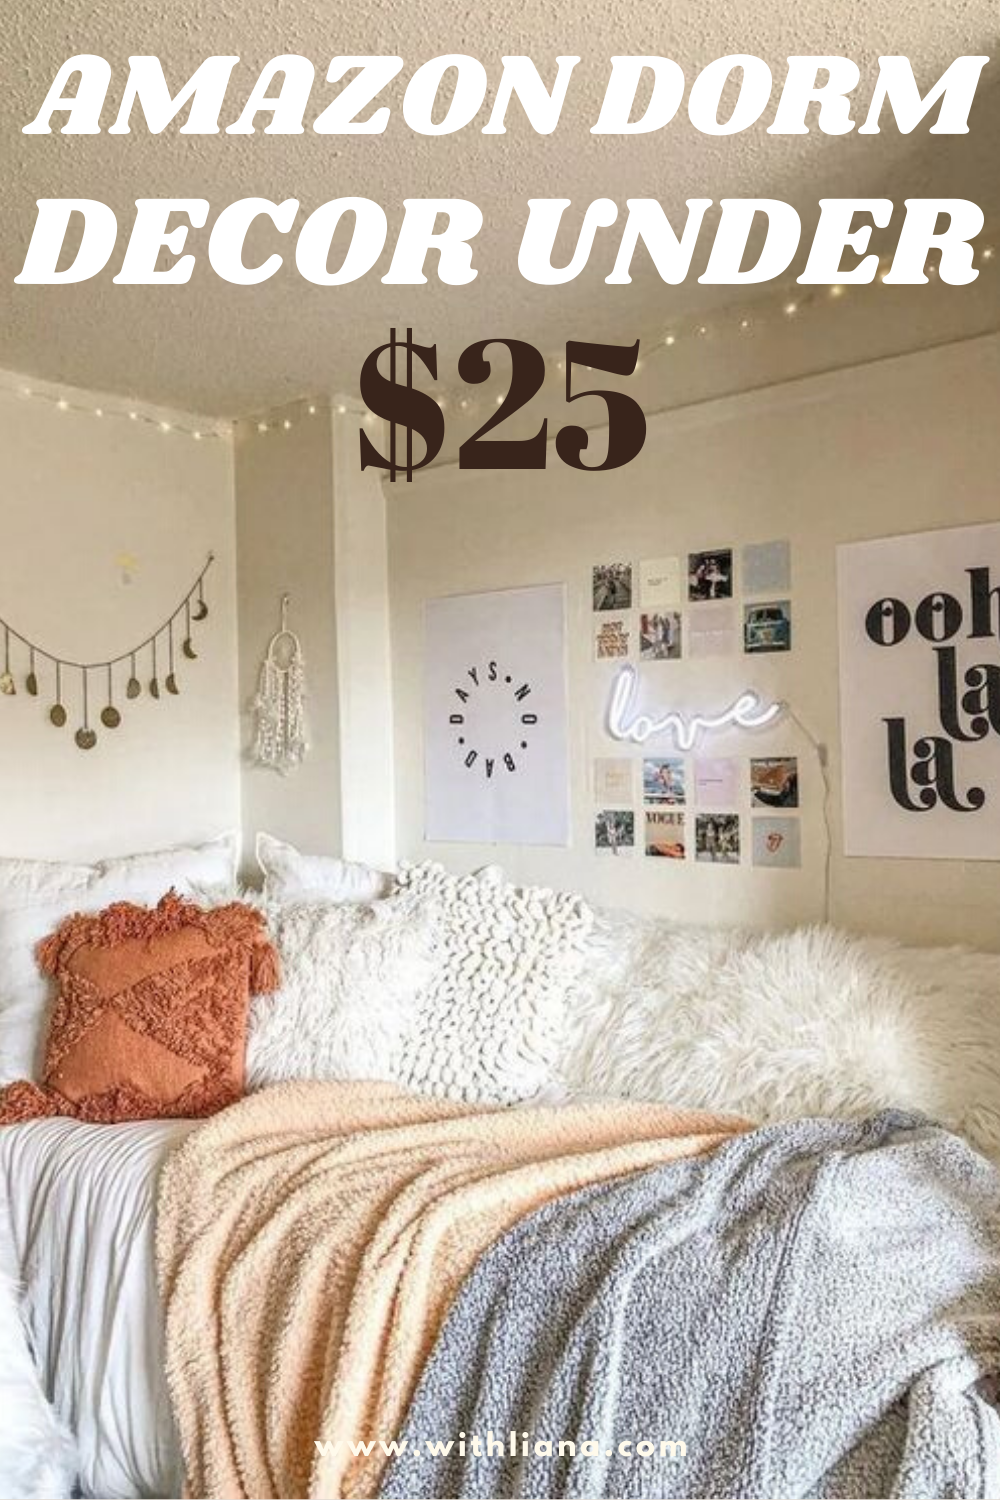 Amazon Dorm Decor Under $25 - Amazon Dorm Decor Under $25 -   19 diy Decorations college ideas